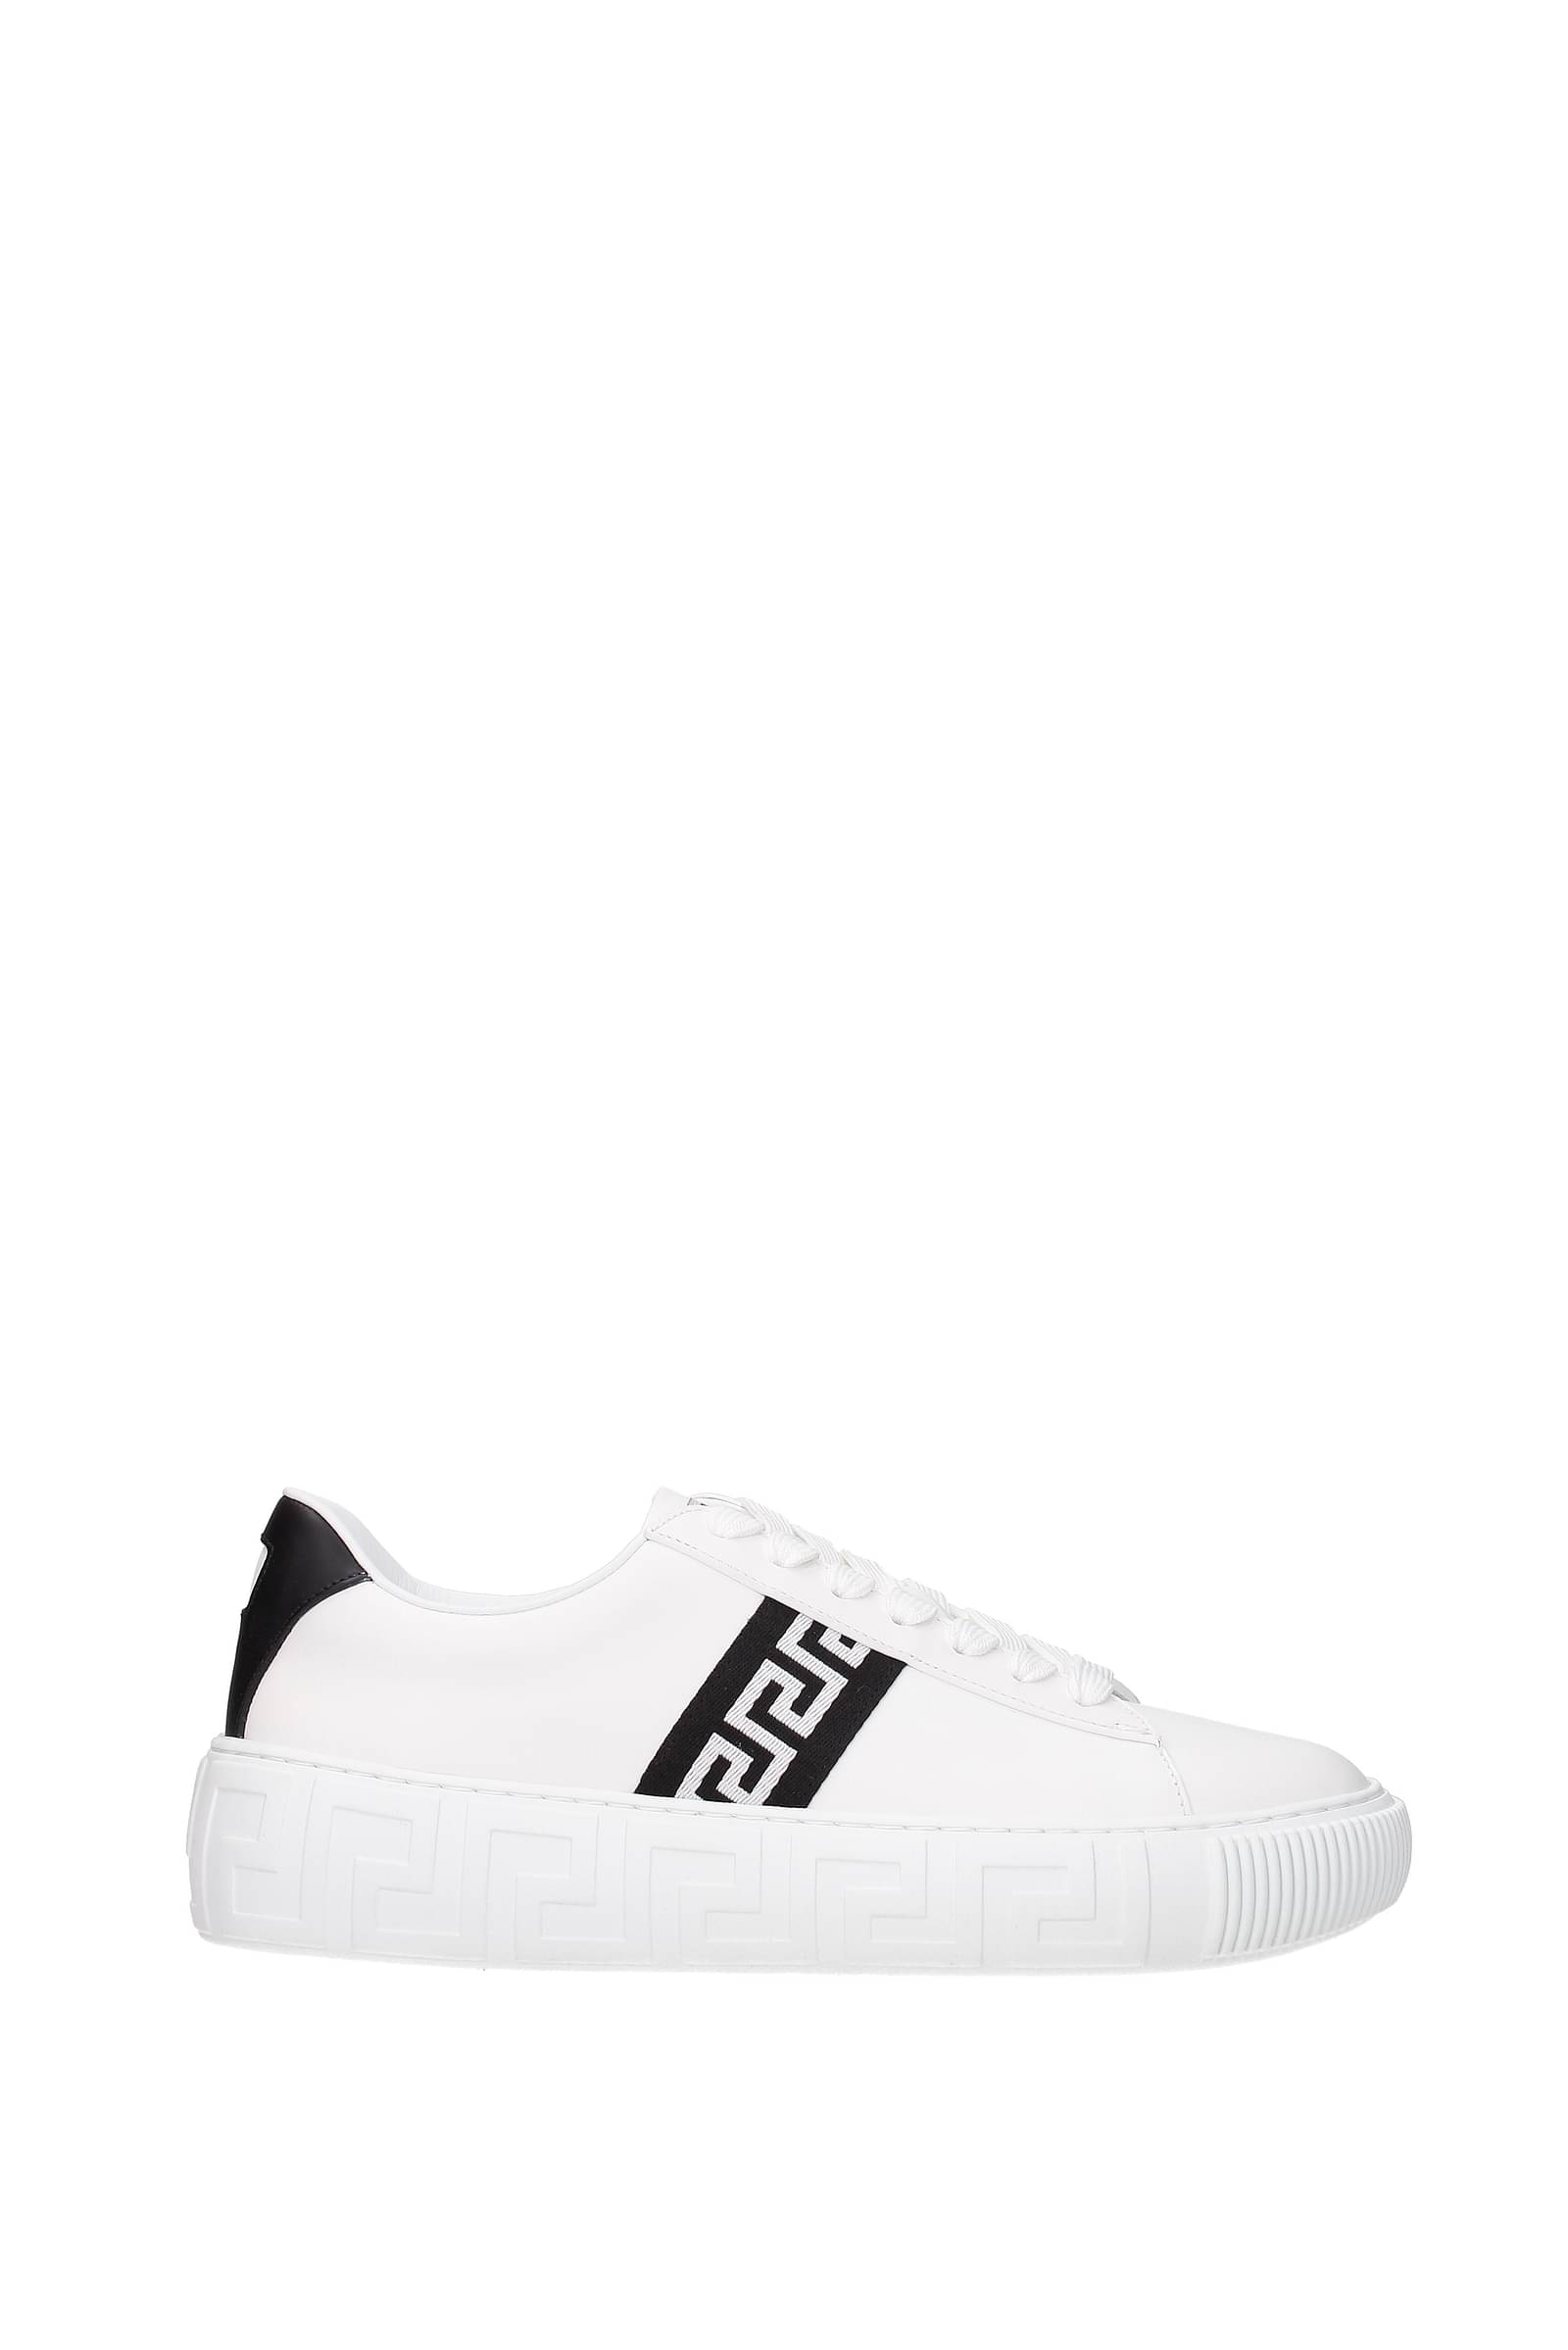 Versace Sneakers greca Men DSUAW Leather White Black